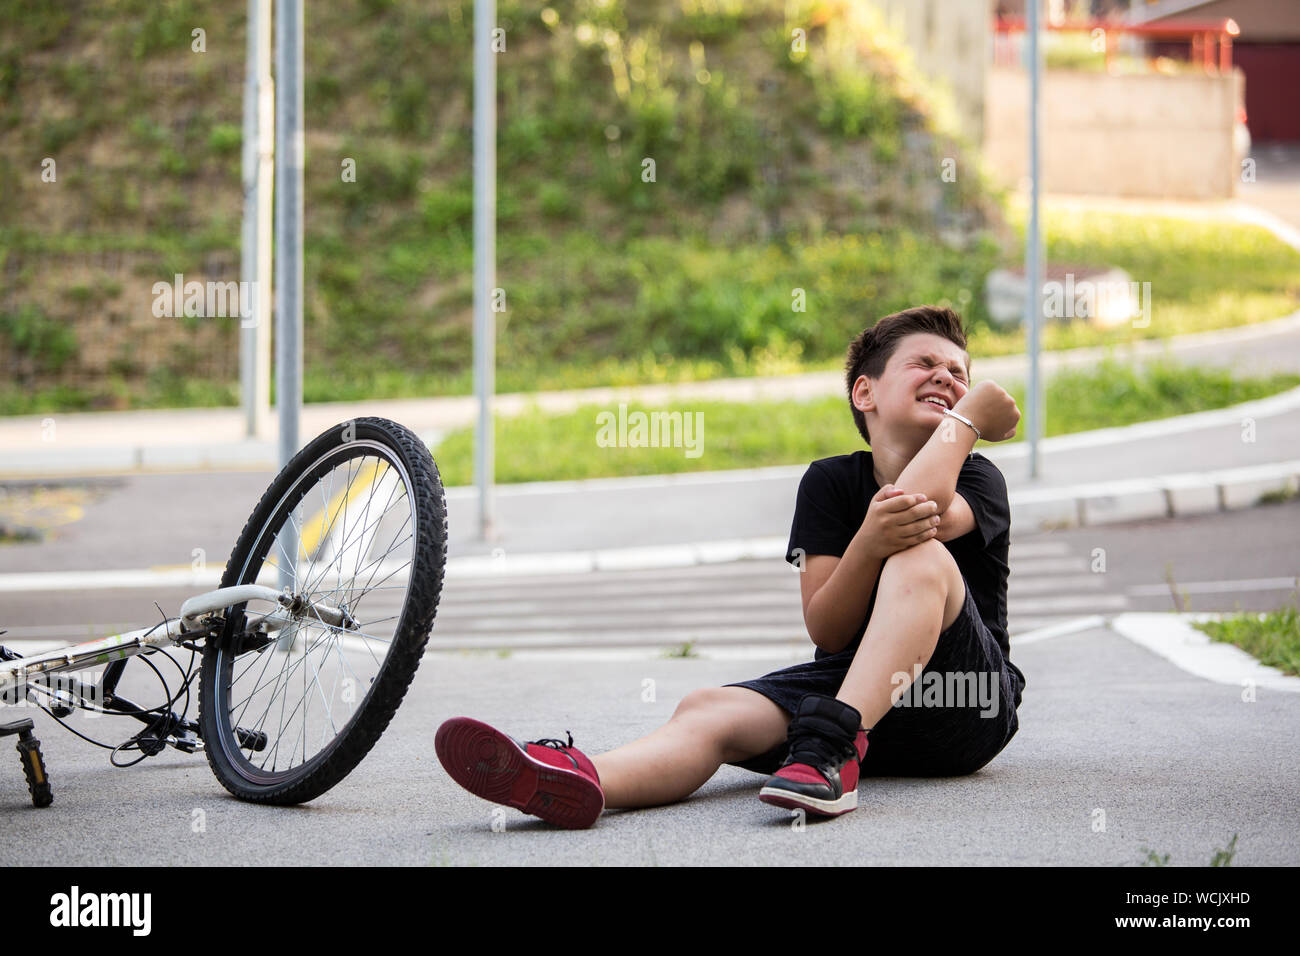 Off his bike. Мальчик упал с велосипеда. Мальчик упал с велочэсипеоа. Подросток упал с велосипеда.